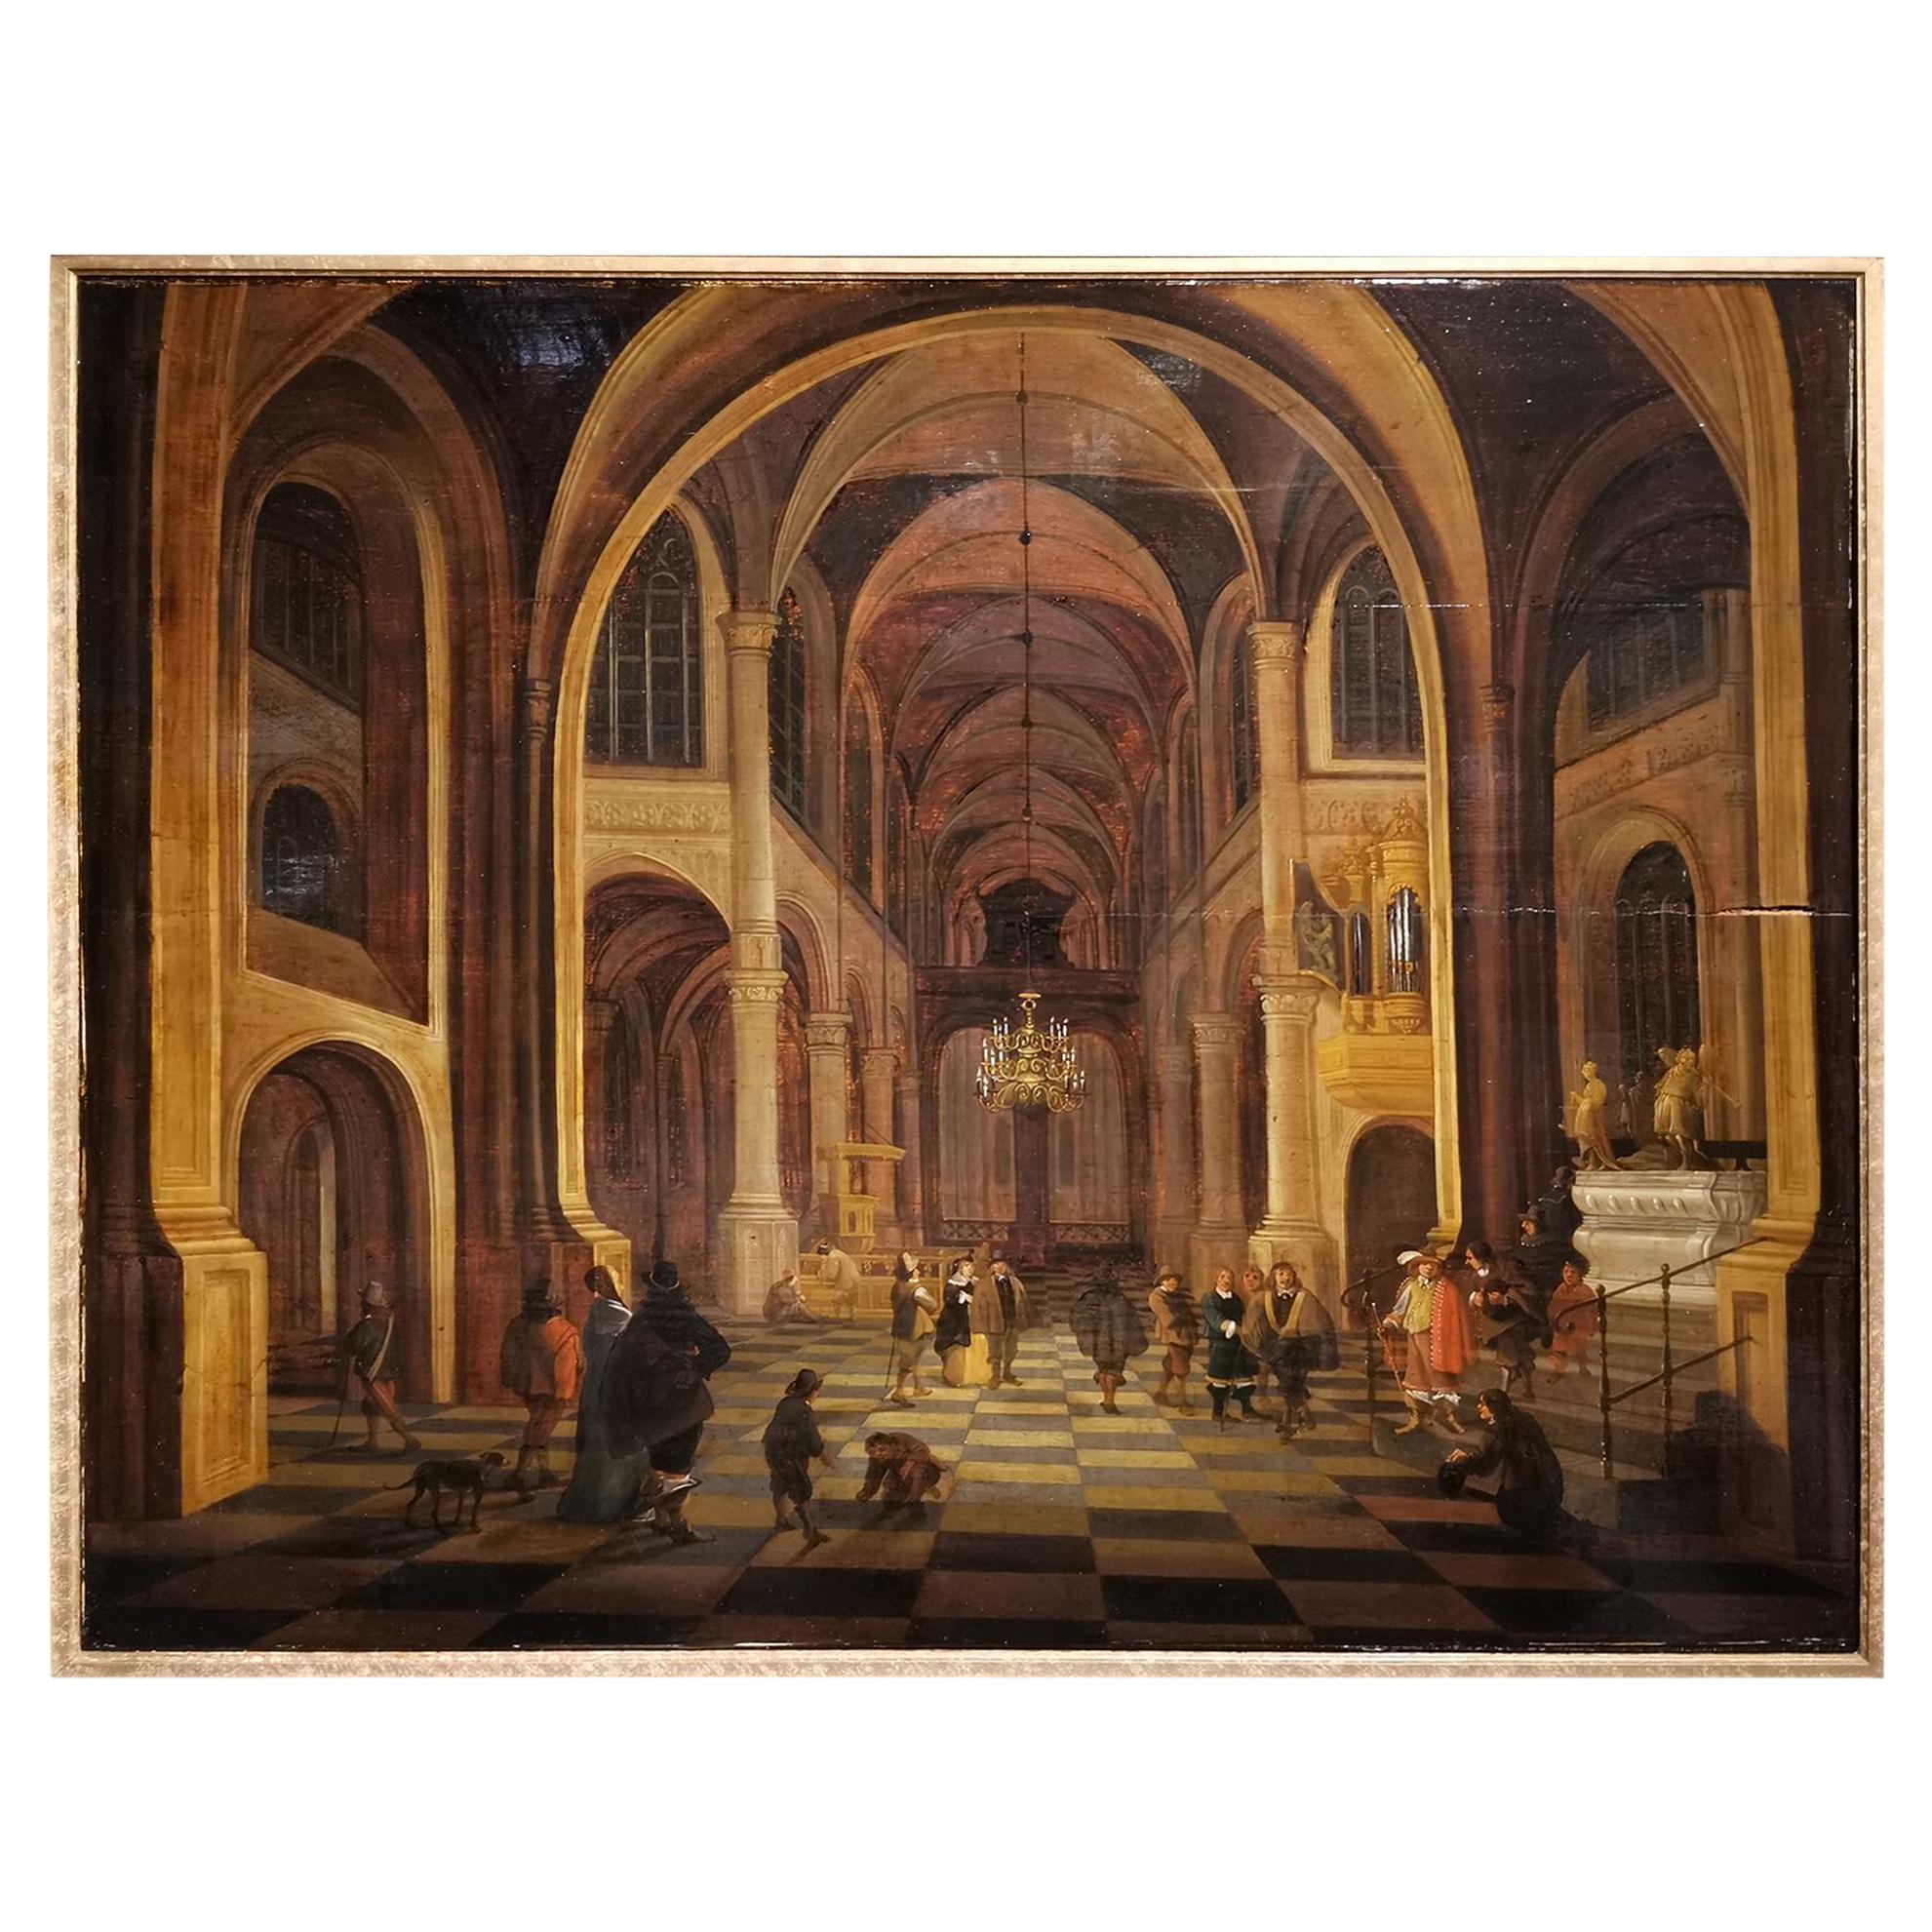 Flemish School 17th Century " Interior of a Church "